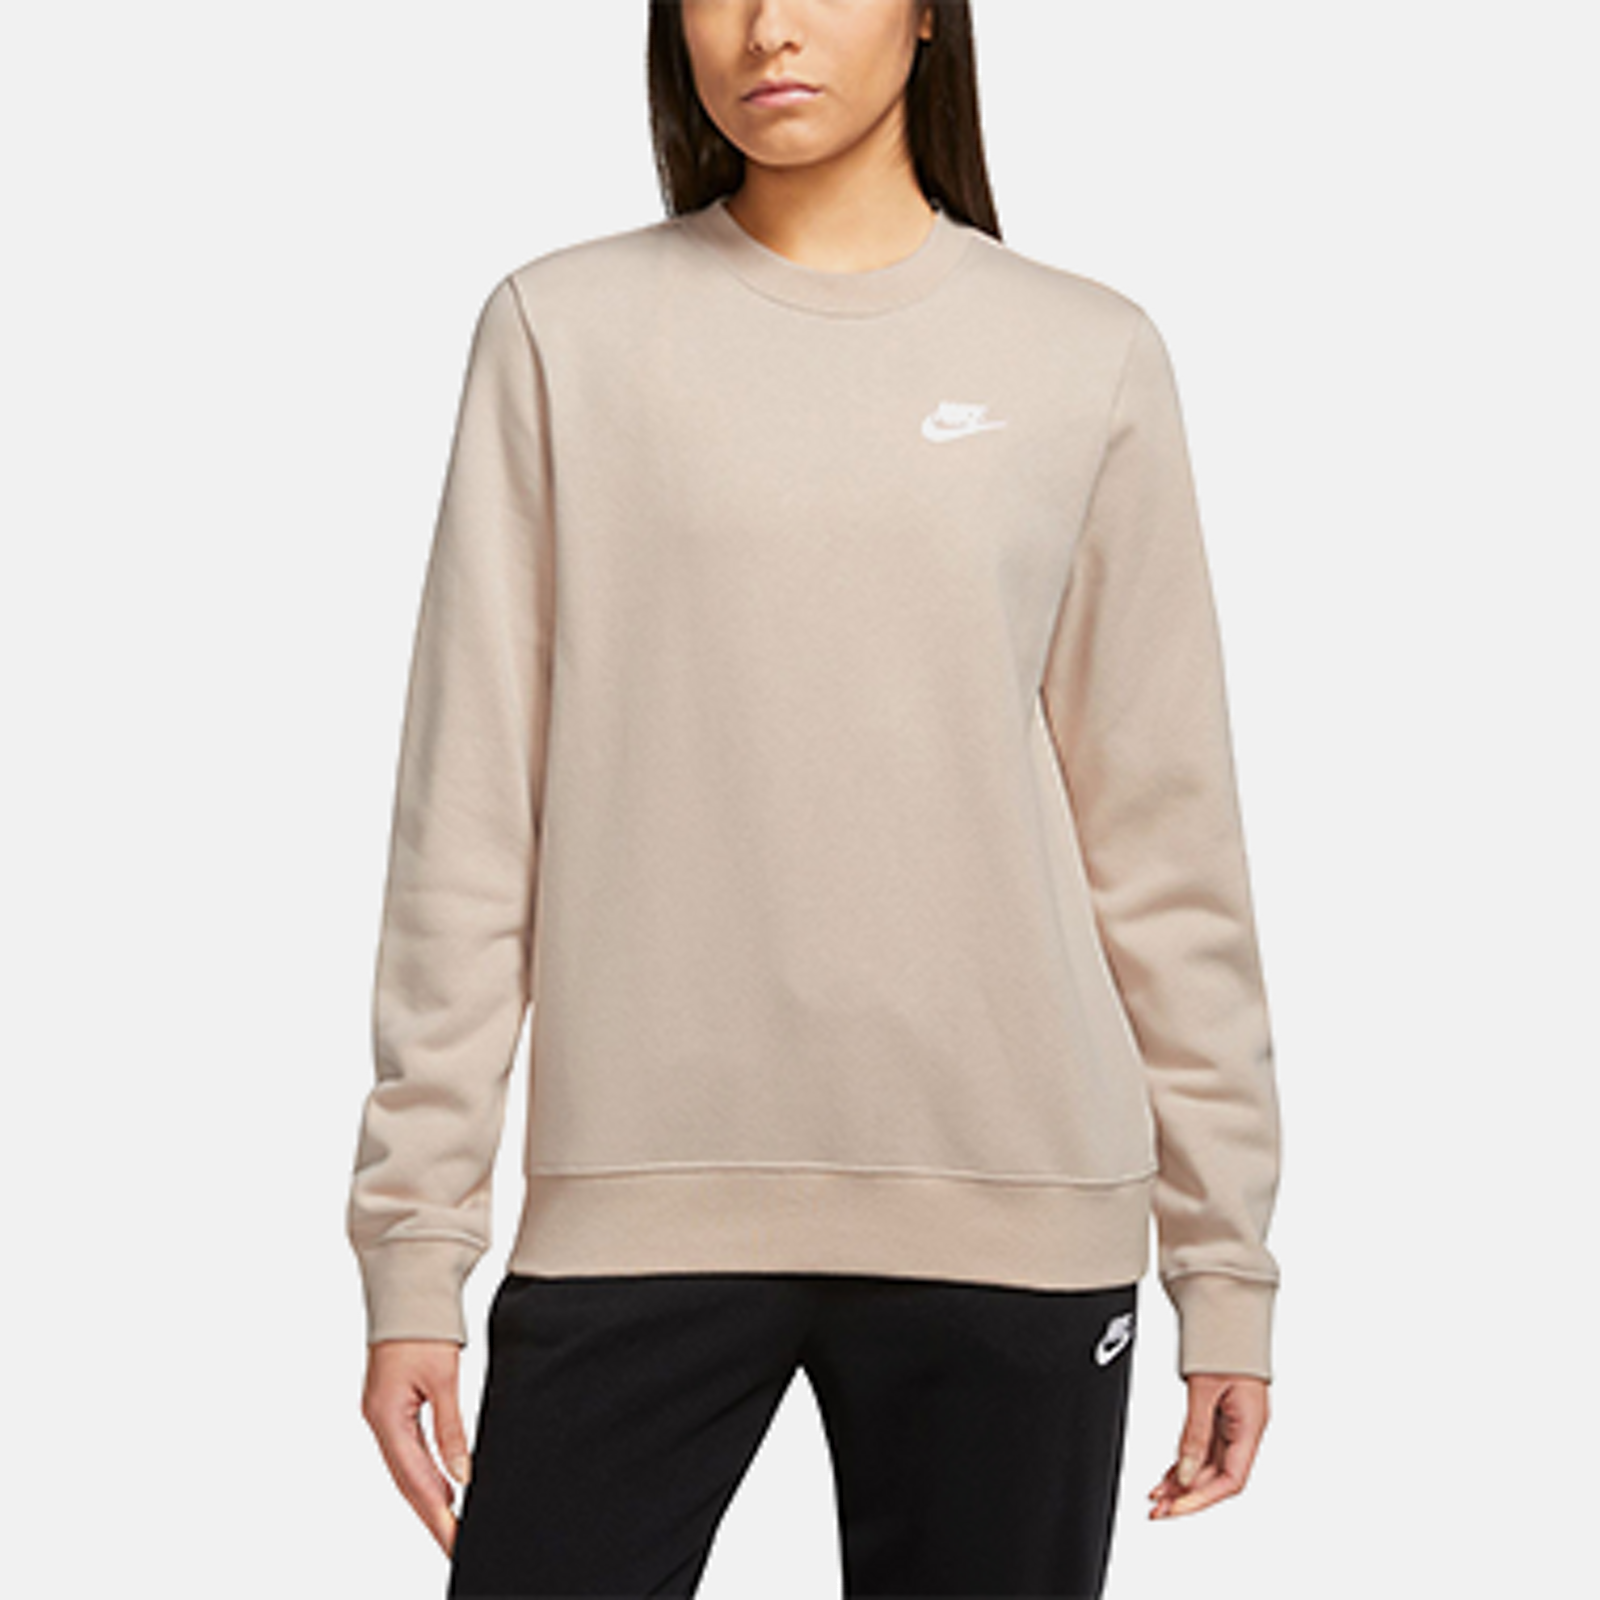 Oversized Women's Hoodies & Sweatshirts - Macy's